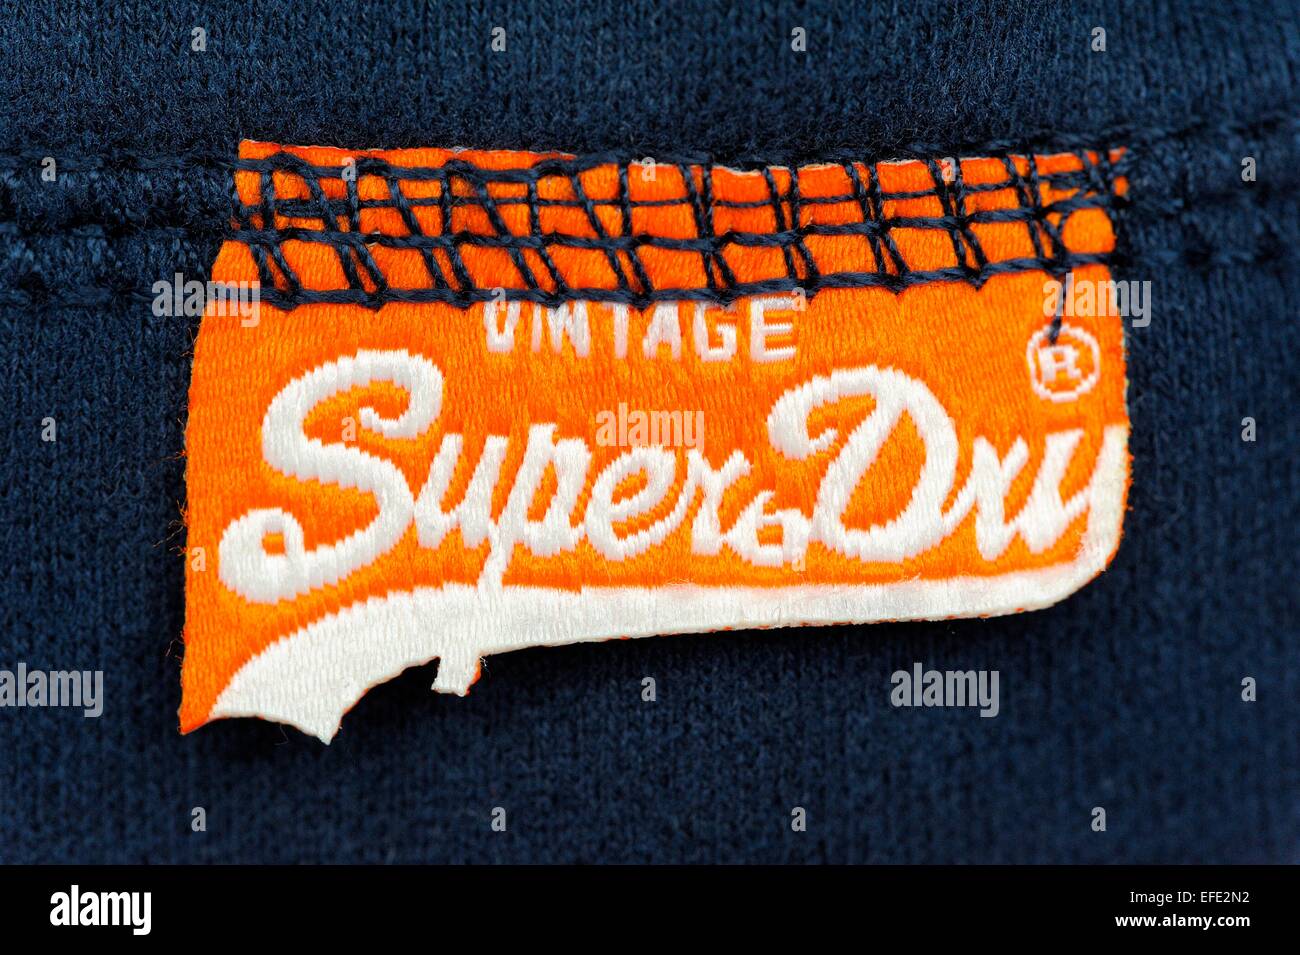 Superdry clothing label logos Stock Photo - Alamy